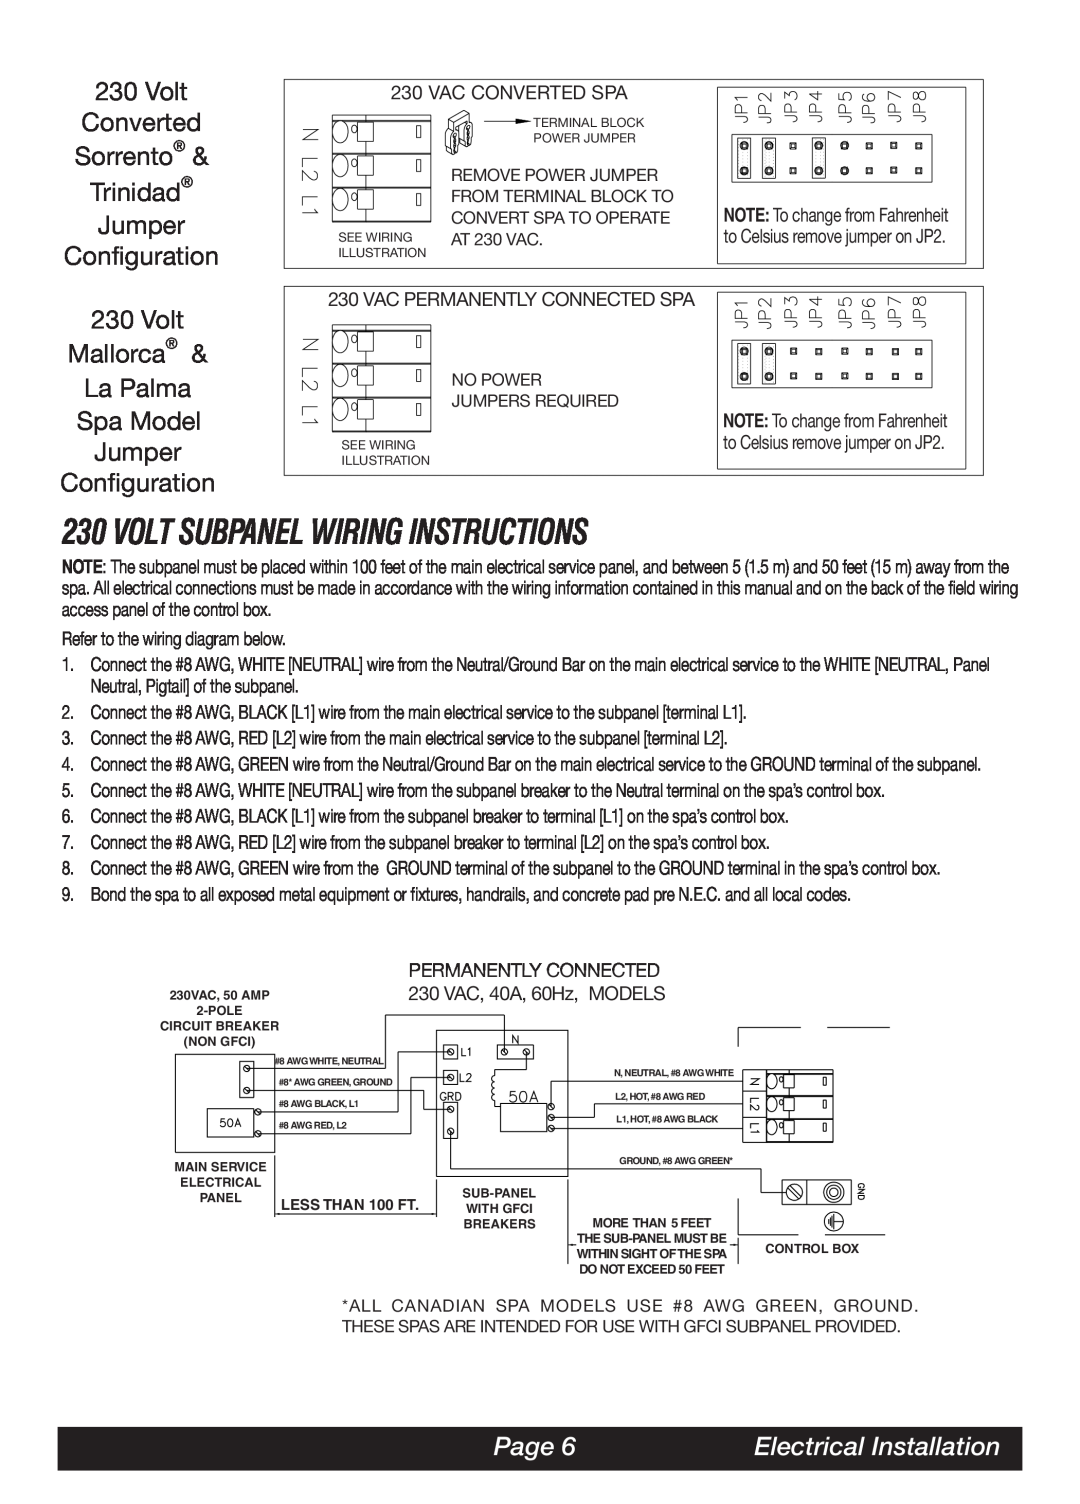 Watkins MAL, LAP, SOR, TRI manual Volt Subpanel Wiring Instructions, Converted, Sorrento & Trinidad Jumper Configuration, Page 